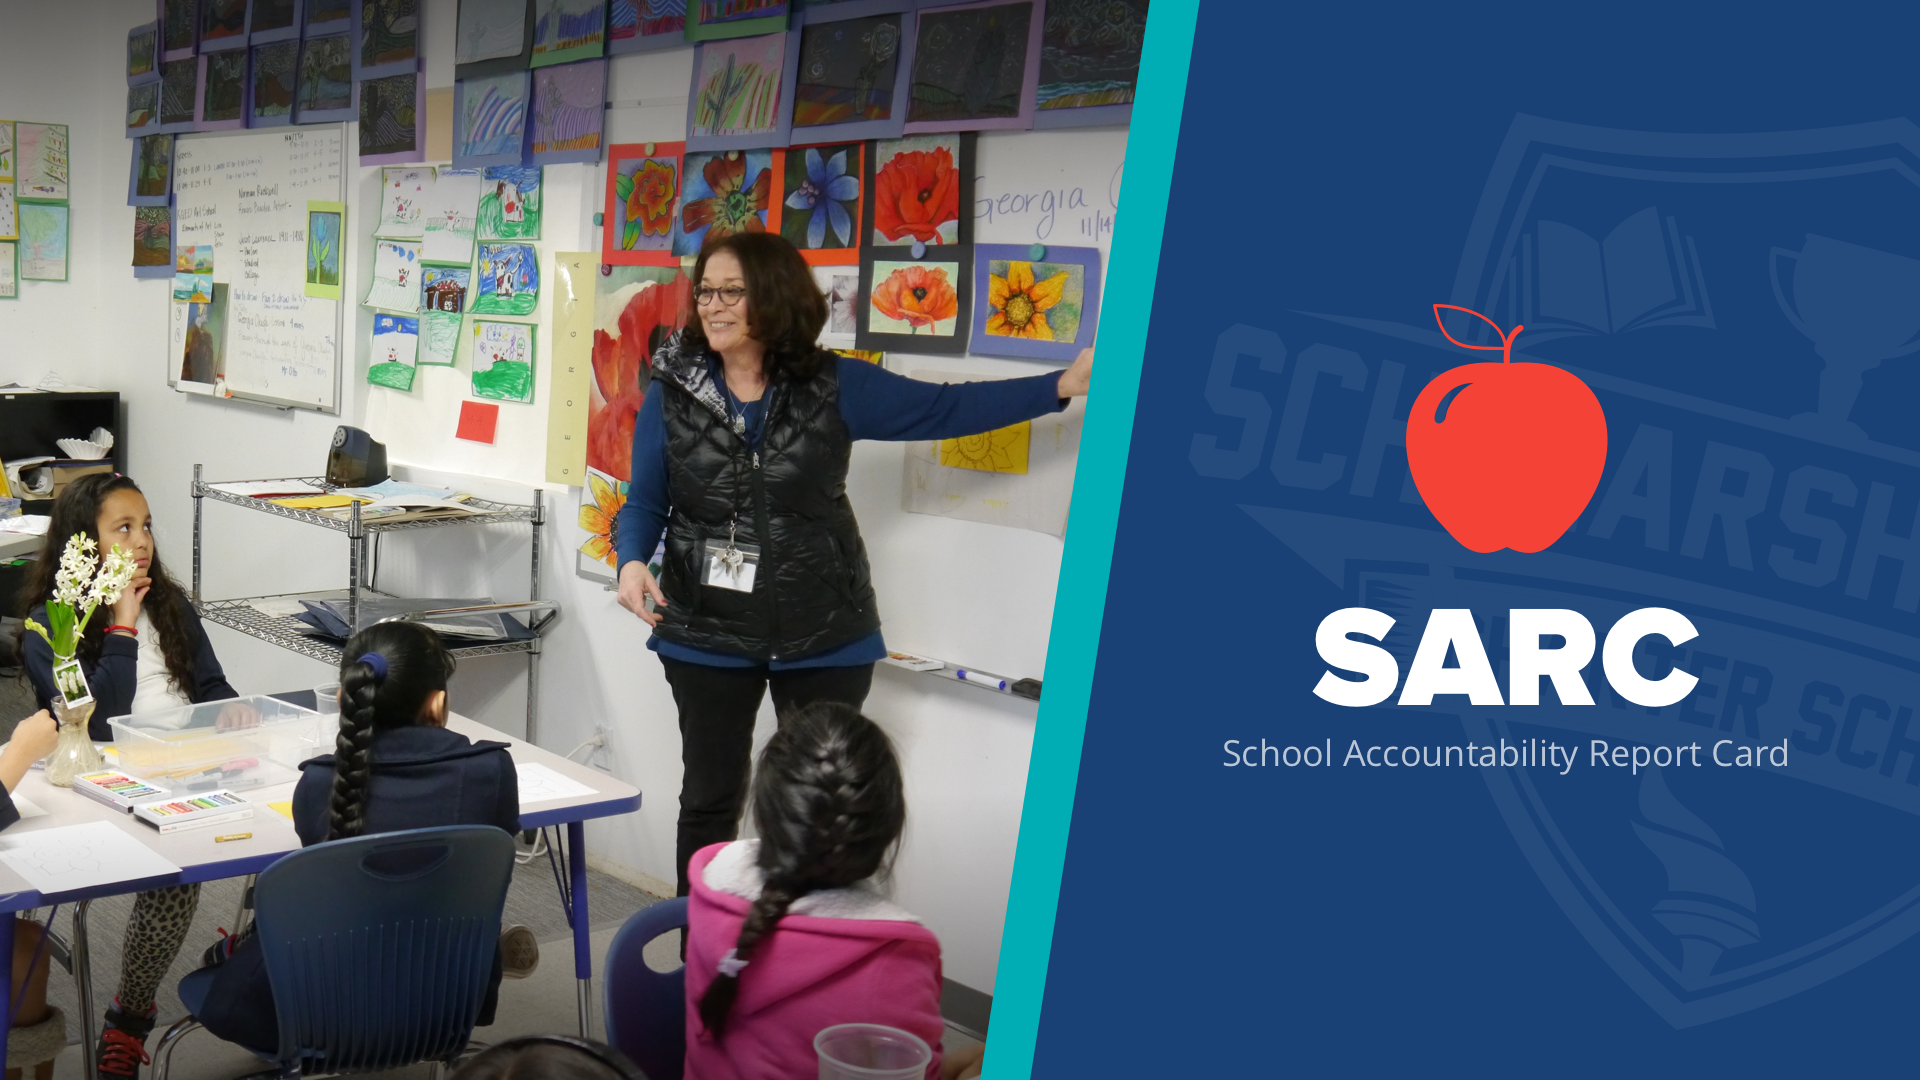 SARC - School Accountability Report Card